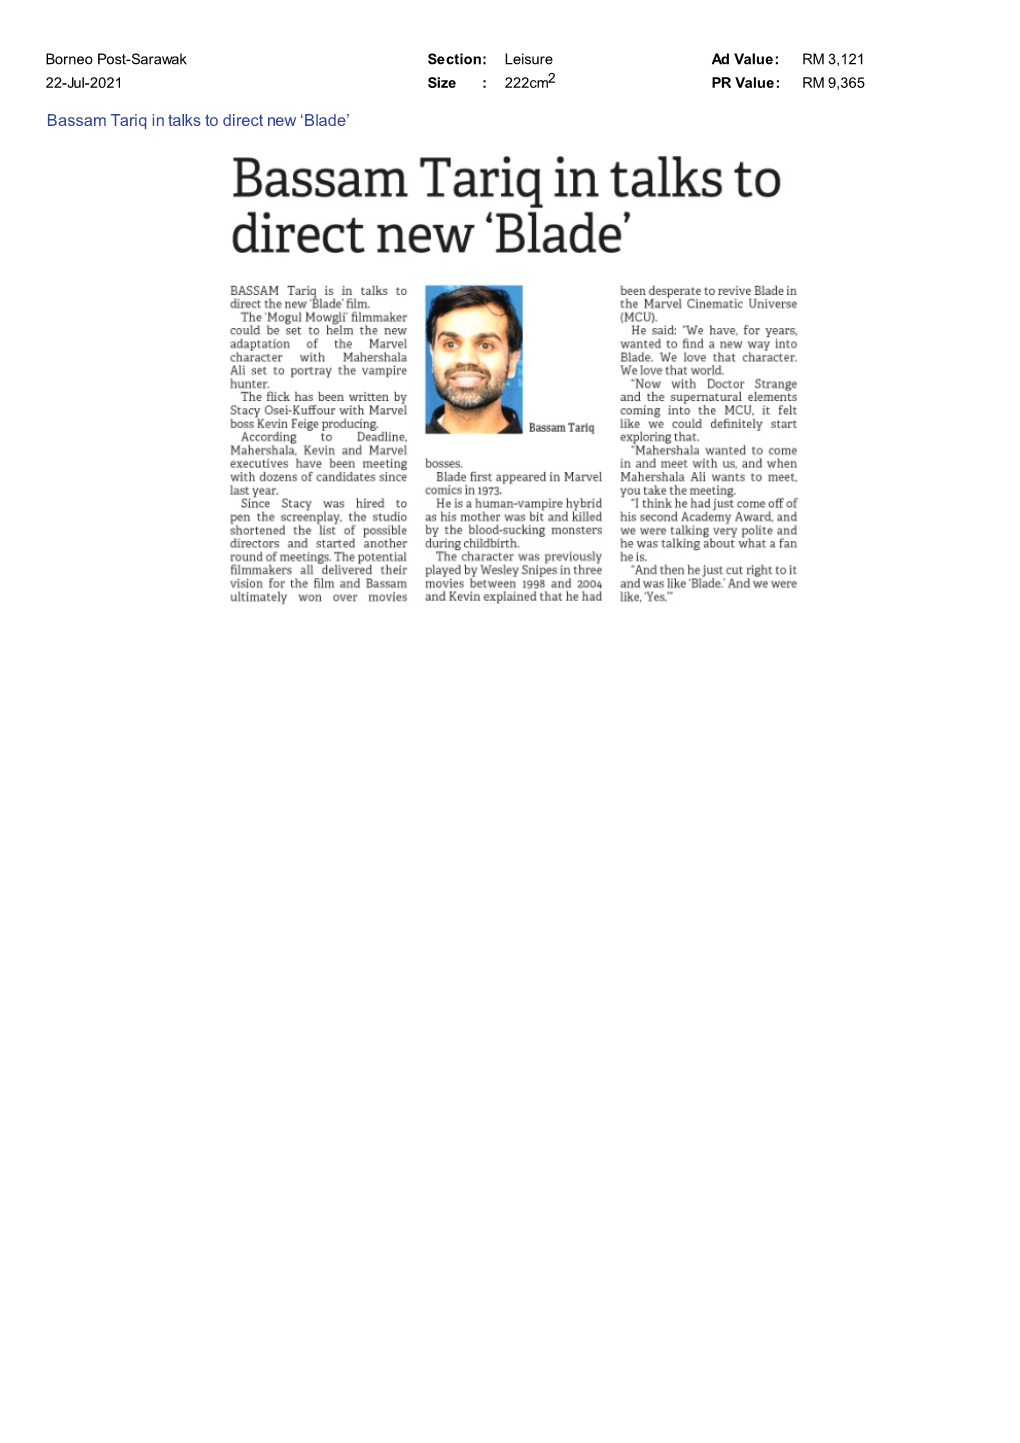 Borneo Post-Sarawak Bassam Tariq in Talks to Direct New 'Blade'